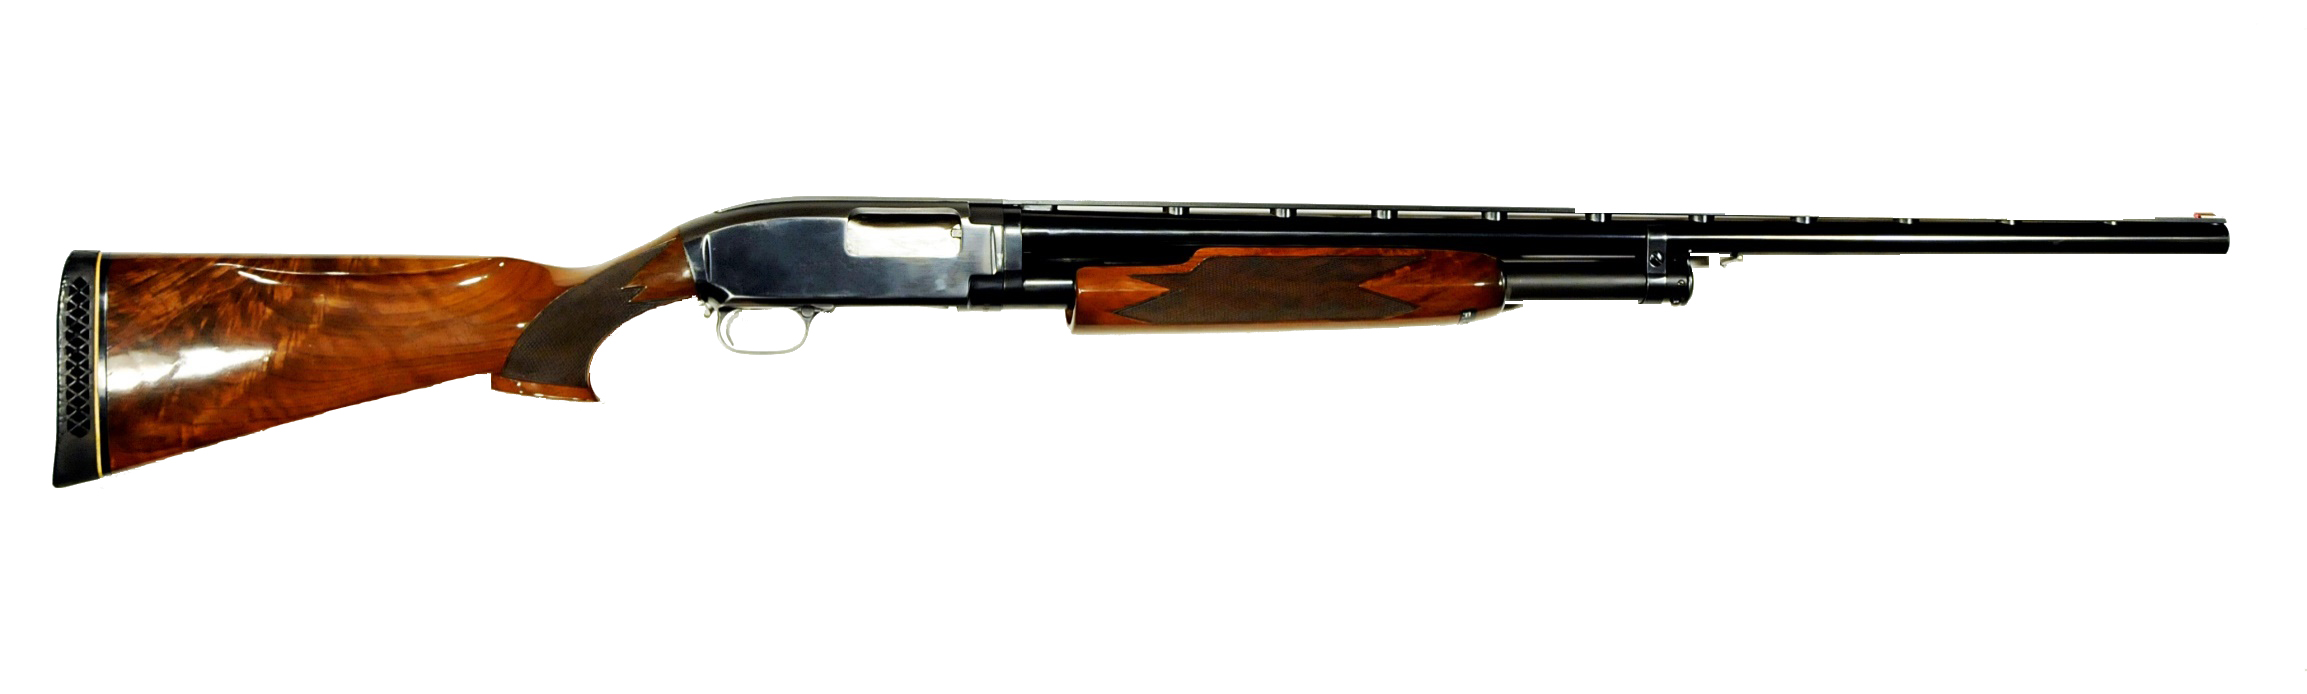 S-2 Winchester Custom M12 Build-up Trap 1860735 12 Gauge